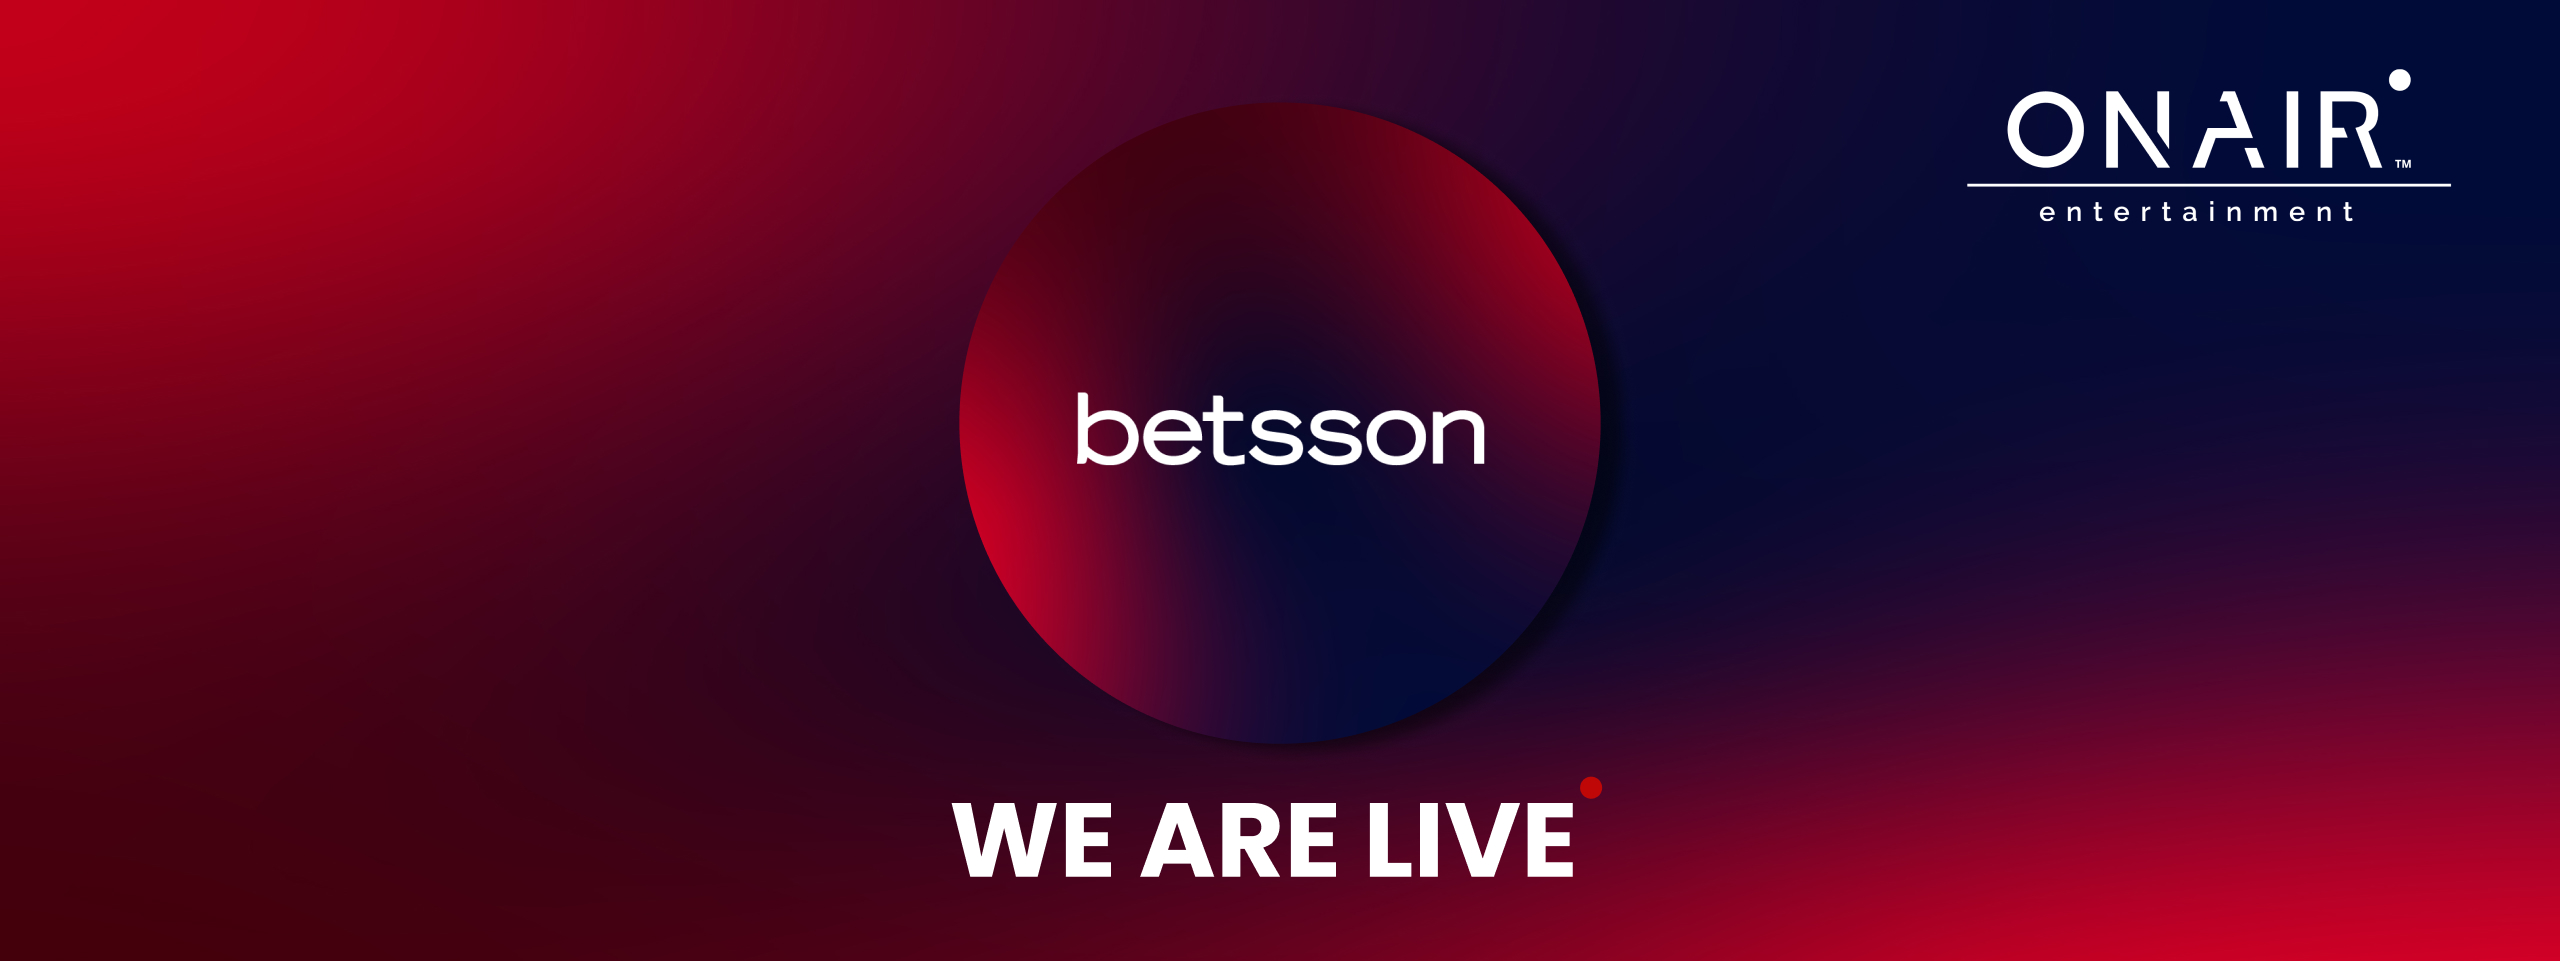 Betsson logo, representing their partnership agreement with OnAir Entertainment.